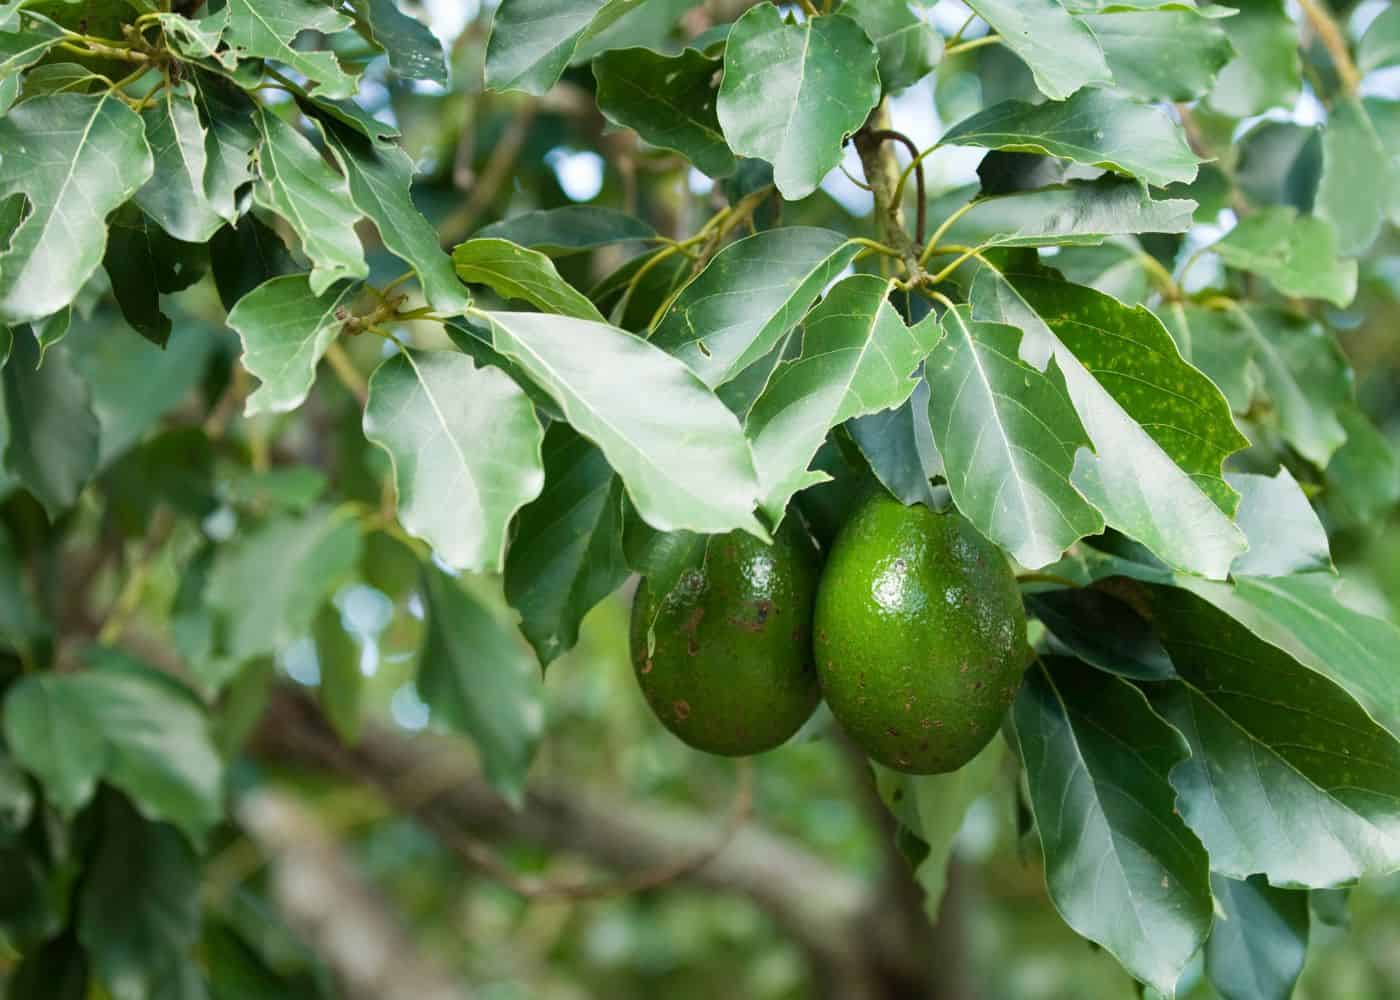 How long for an avocado tree to bear fruit